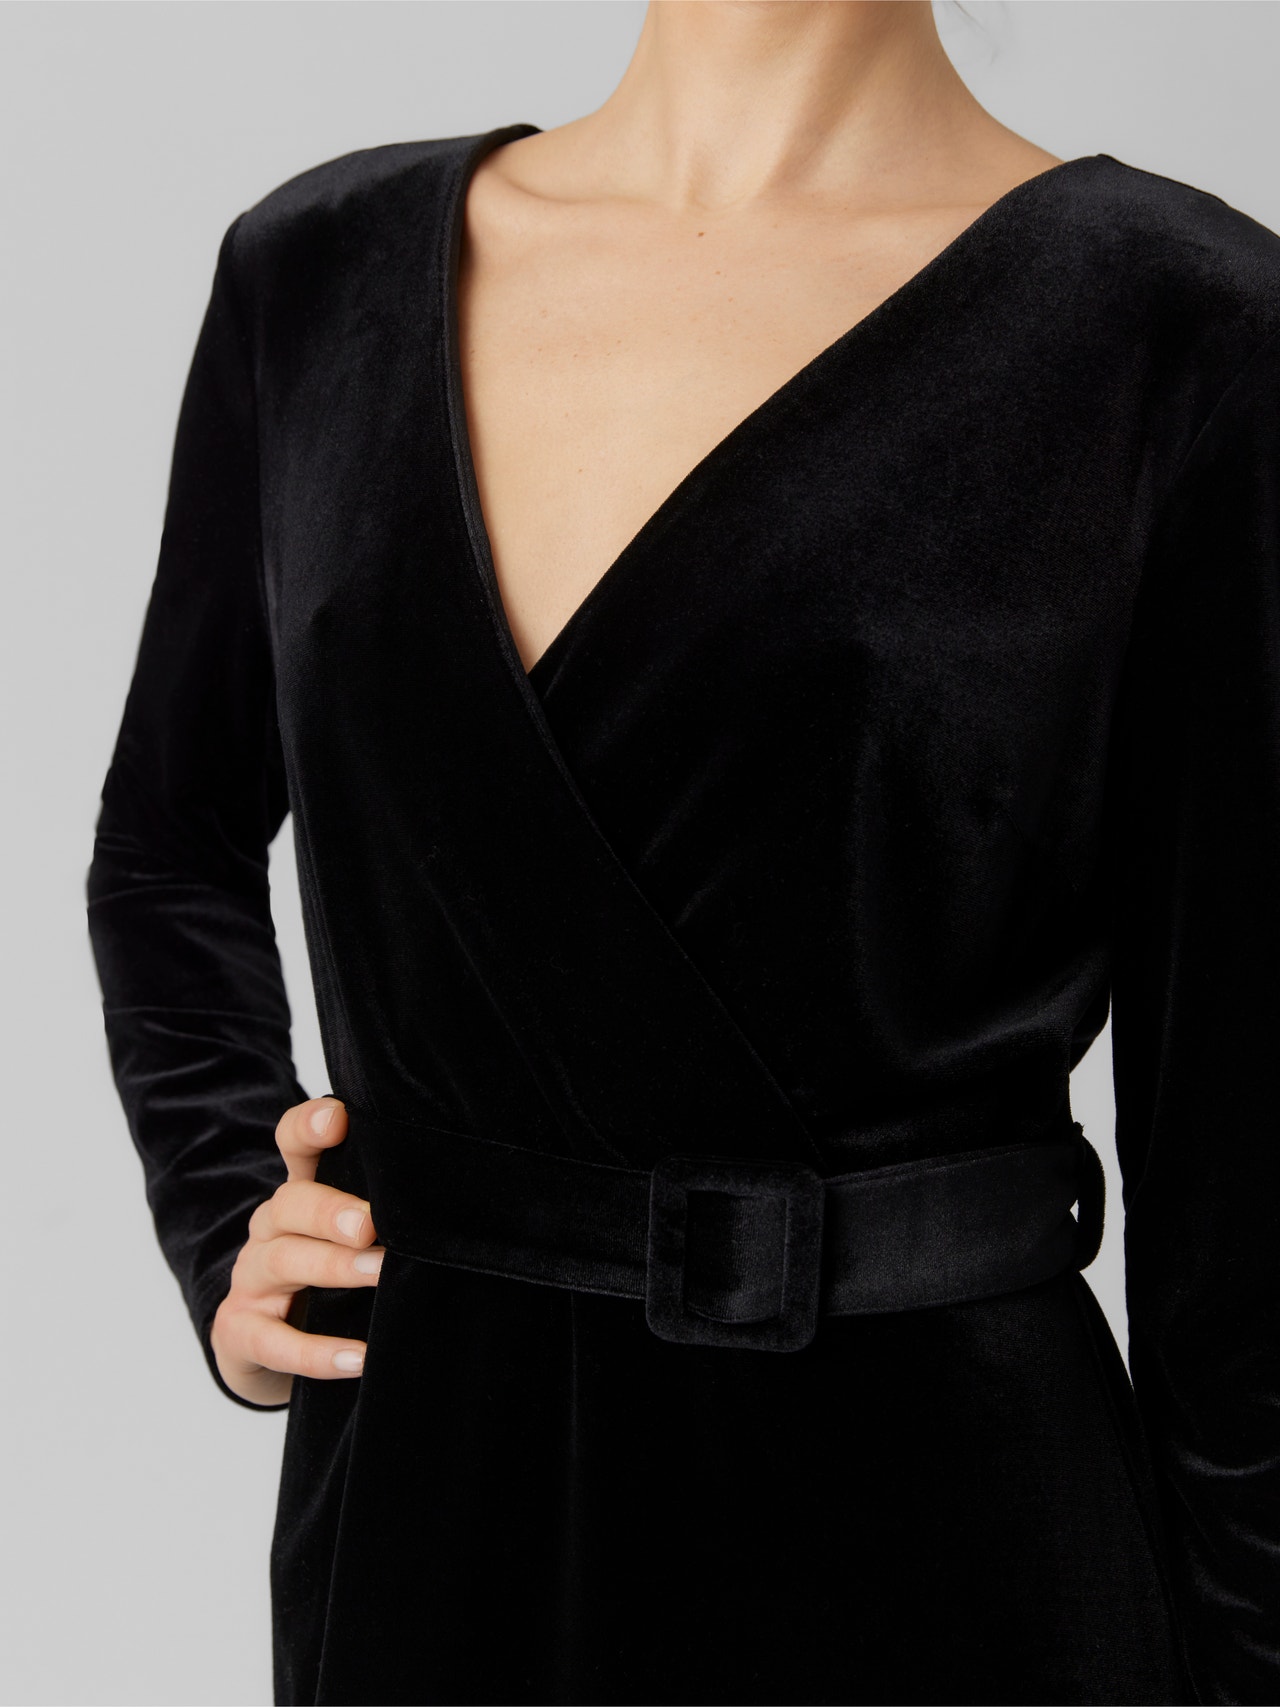 Vero Moda VMCARLY Robe longue -Black - 10303359